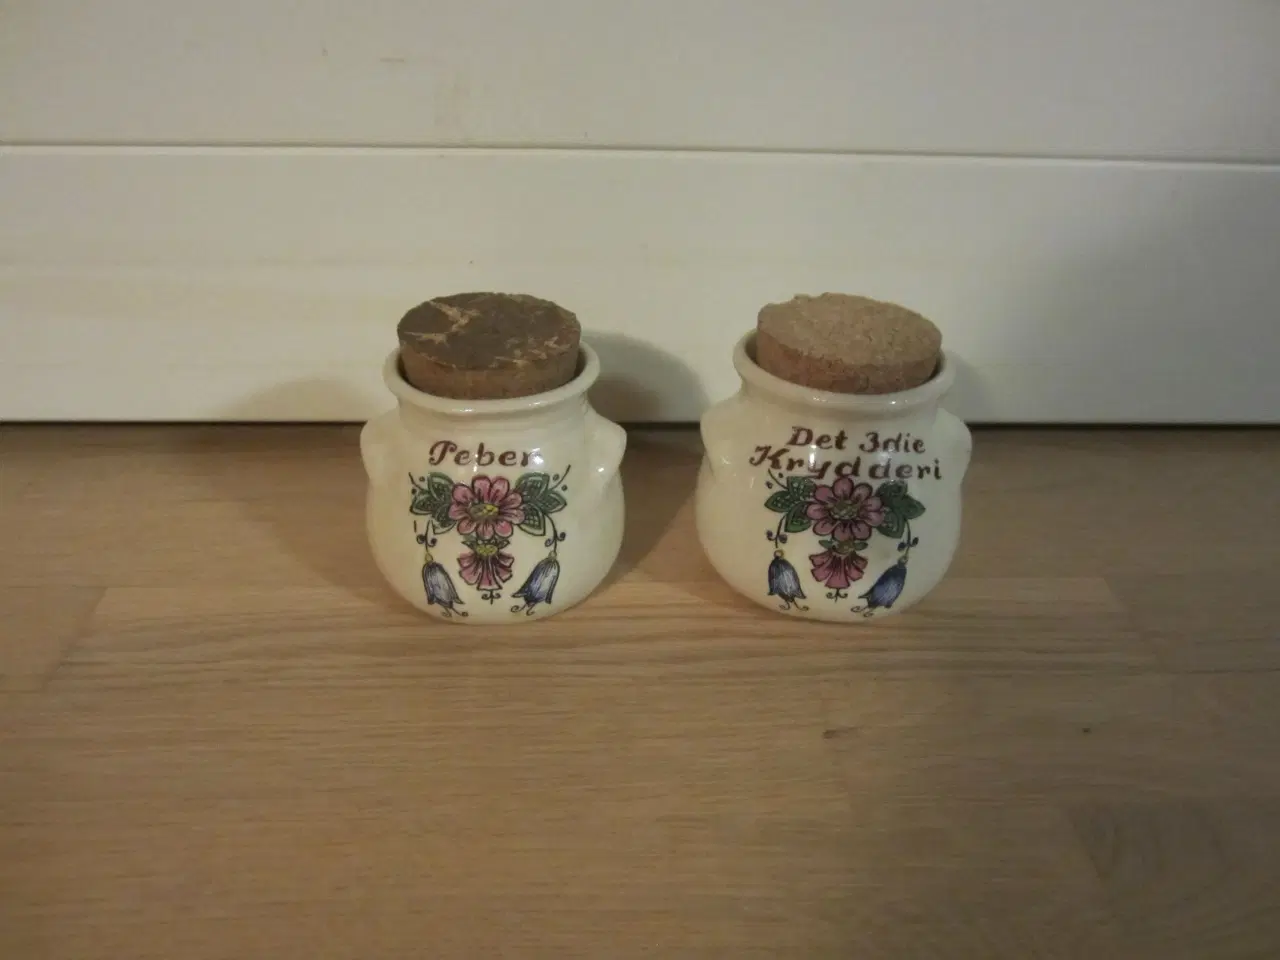 Billede 2 - Aksini krydderi krukker Peber og Det 3.krydderi pr